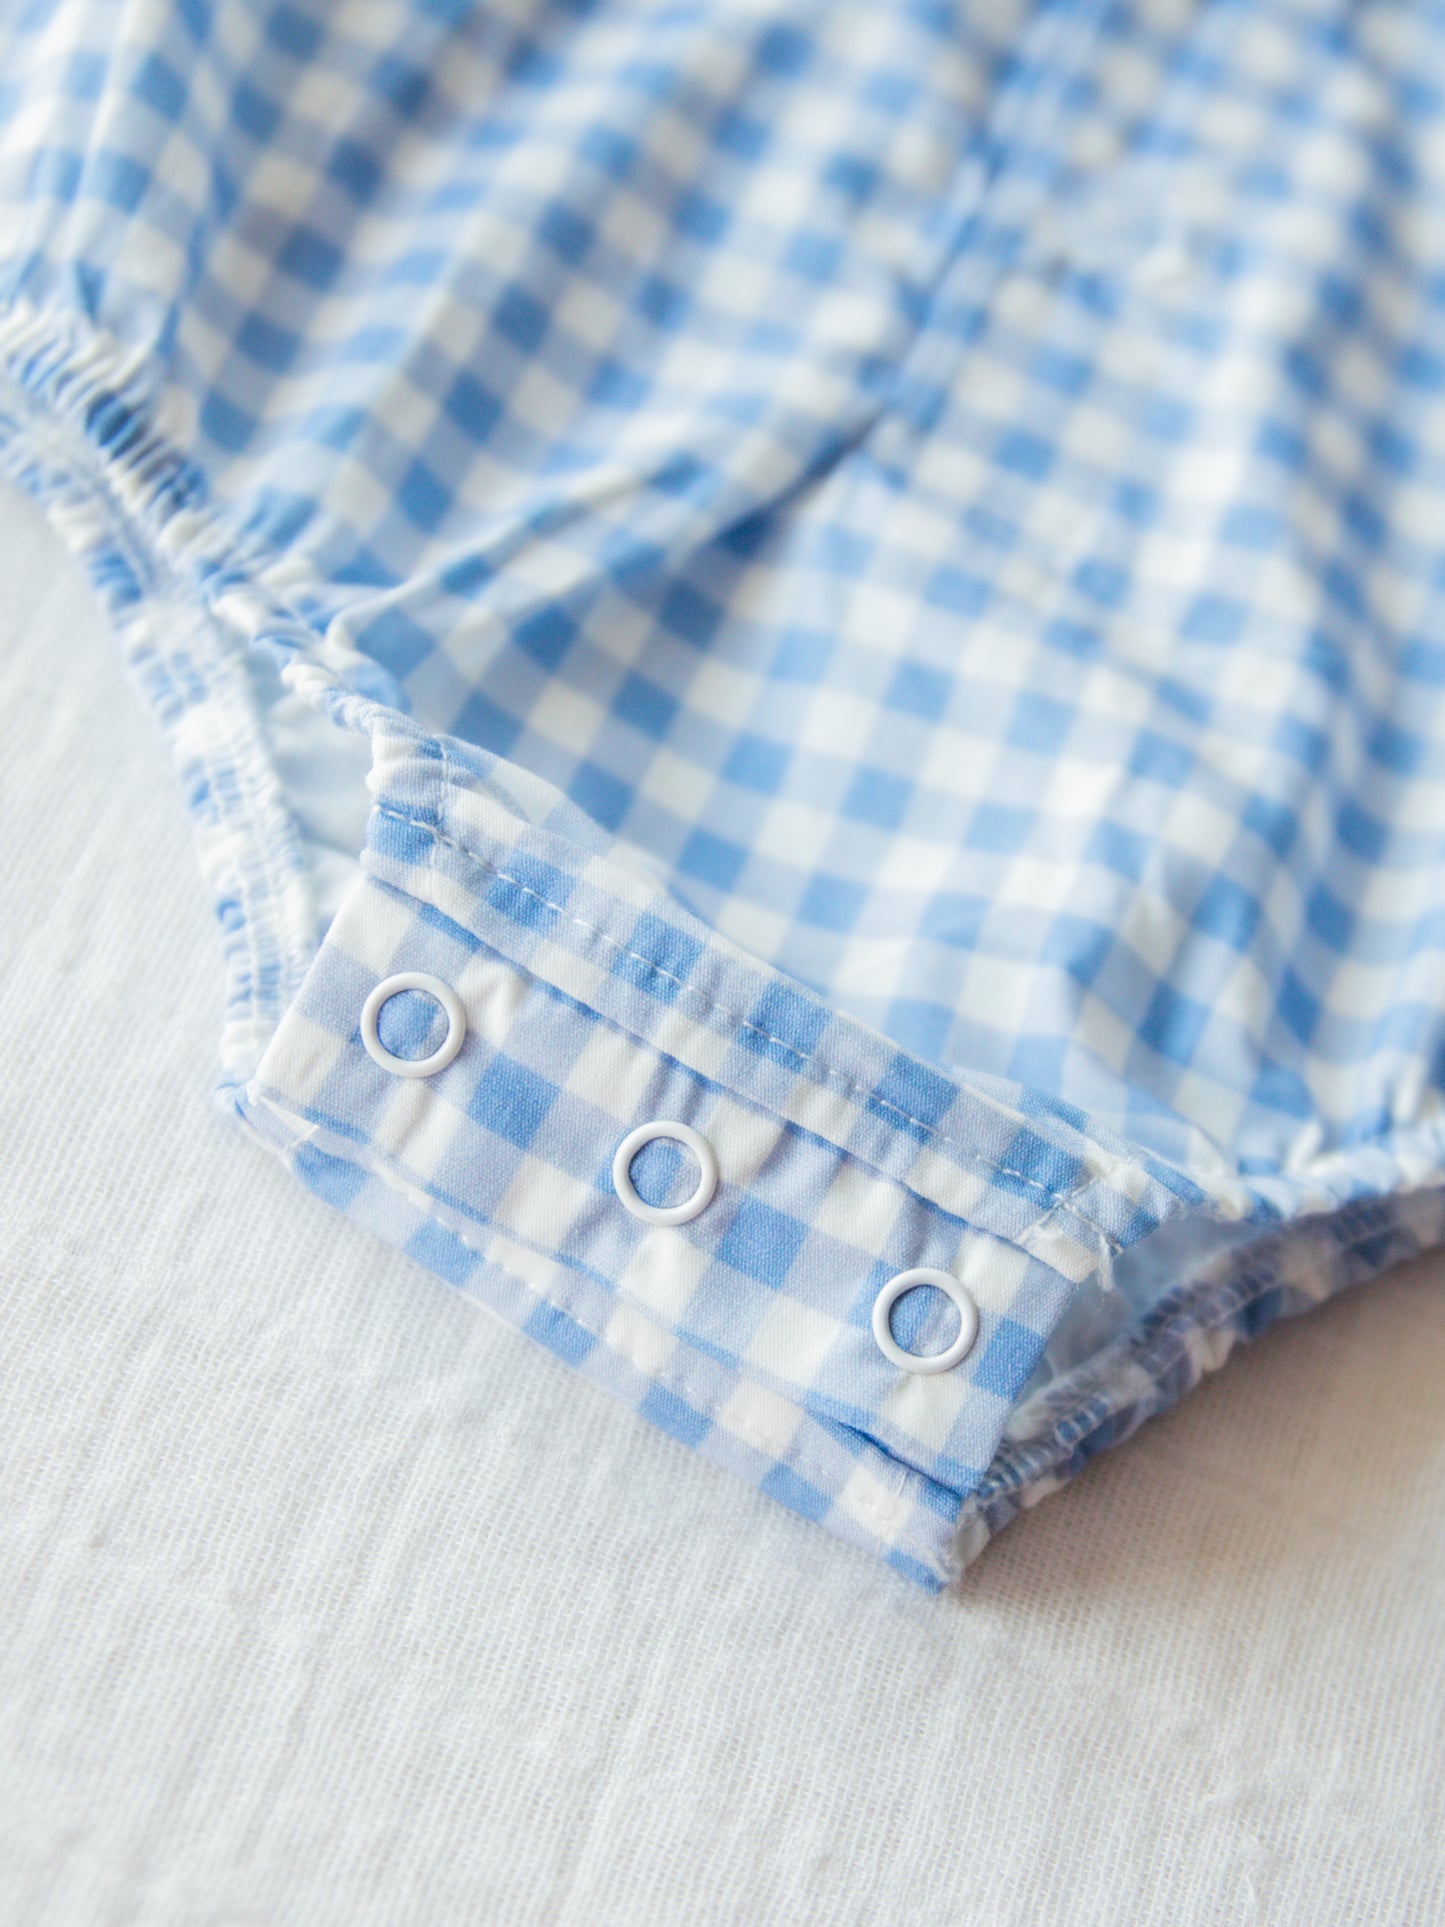 Boy's Button Up Shirt - Hippity Check